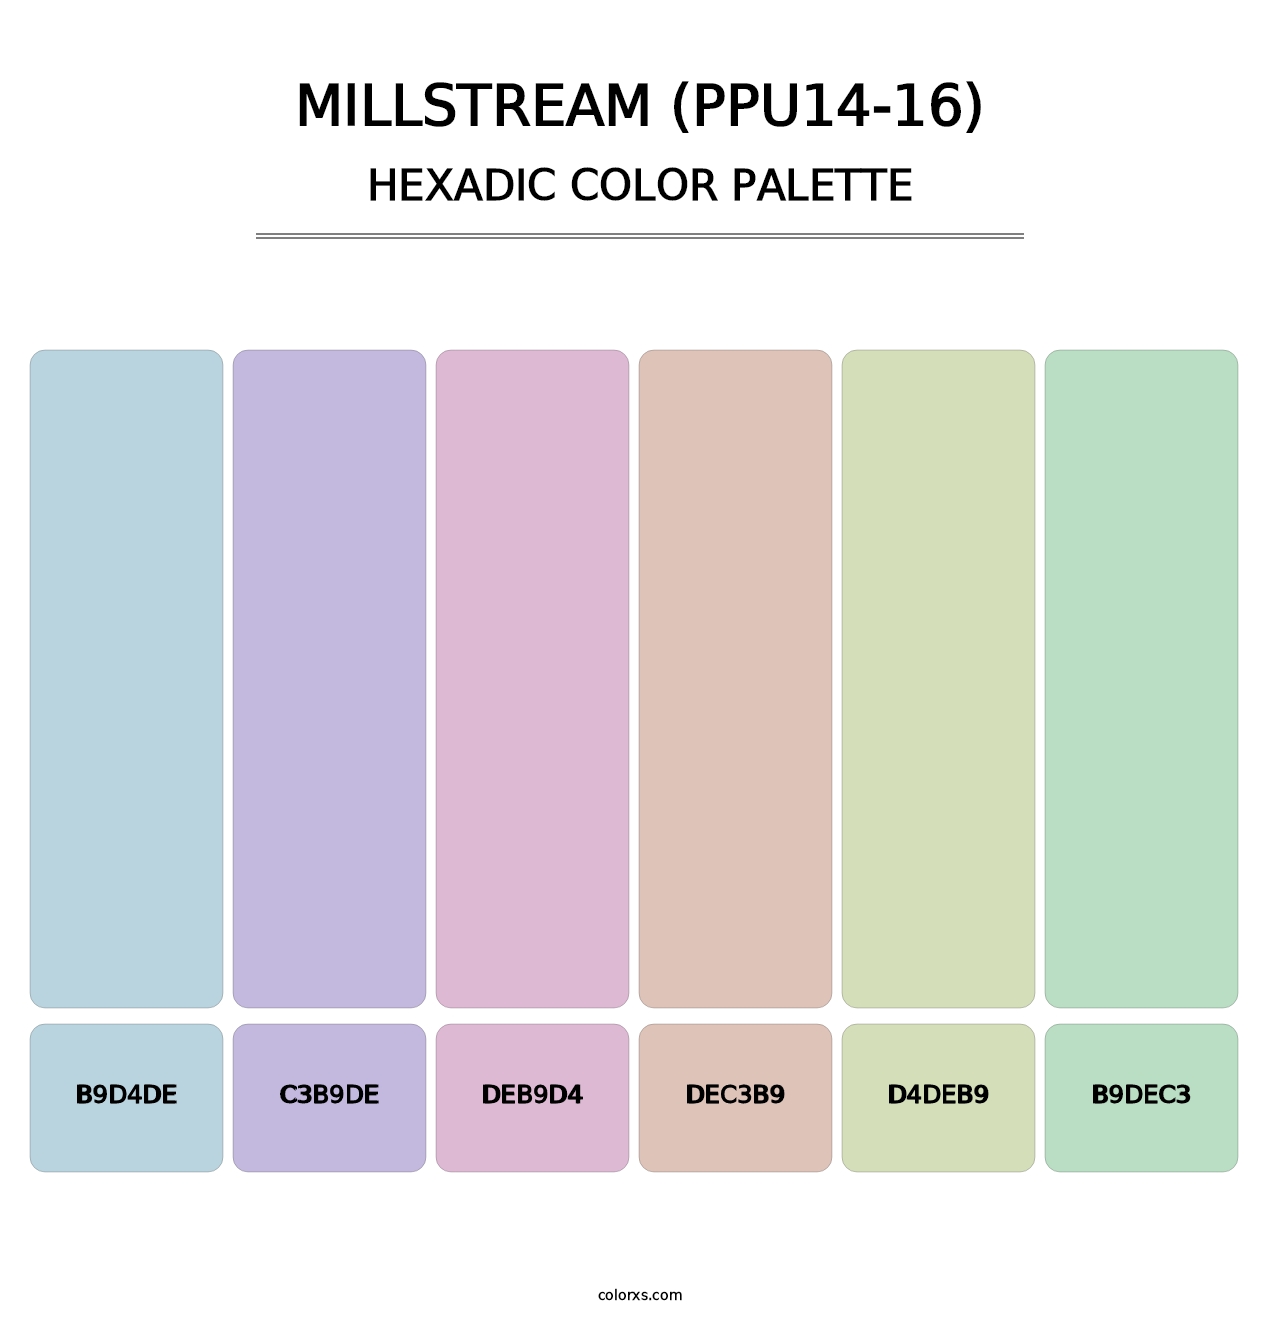 Millstream (PPU14-16) - Hexadic Color Palette